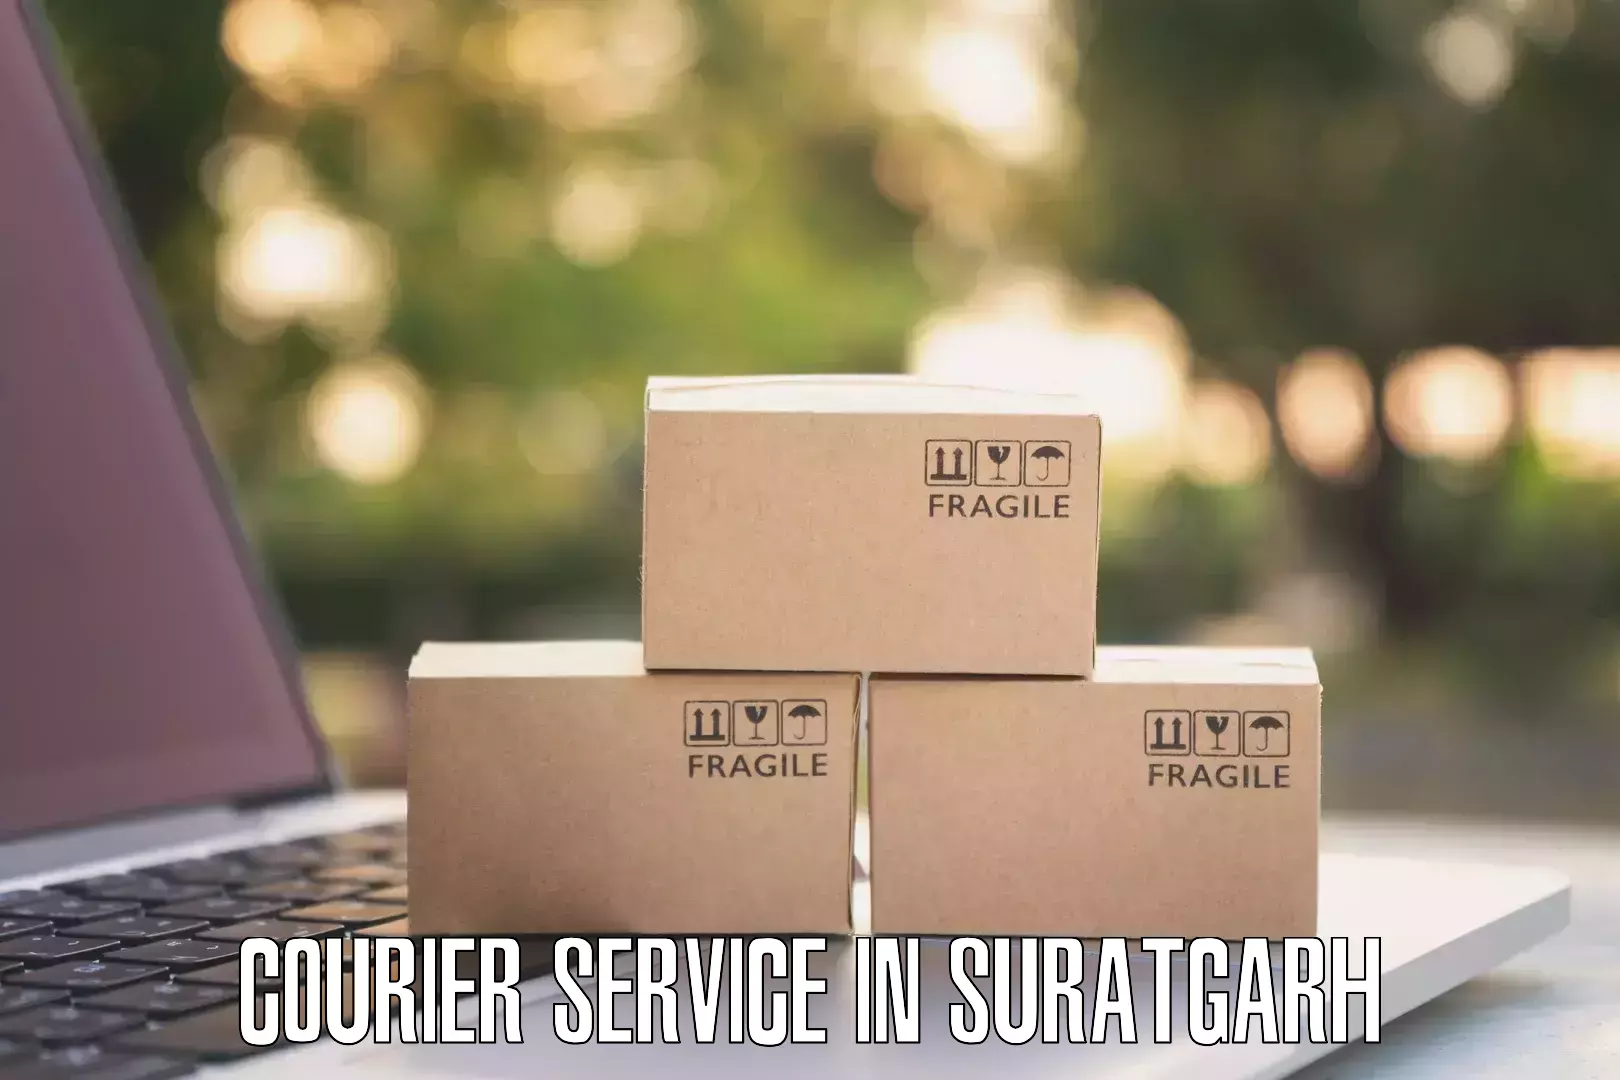 Speedy delivery service in Suratgarh